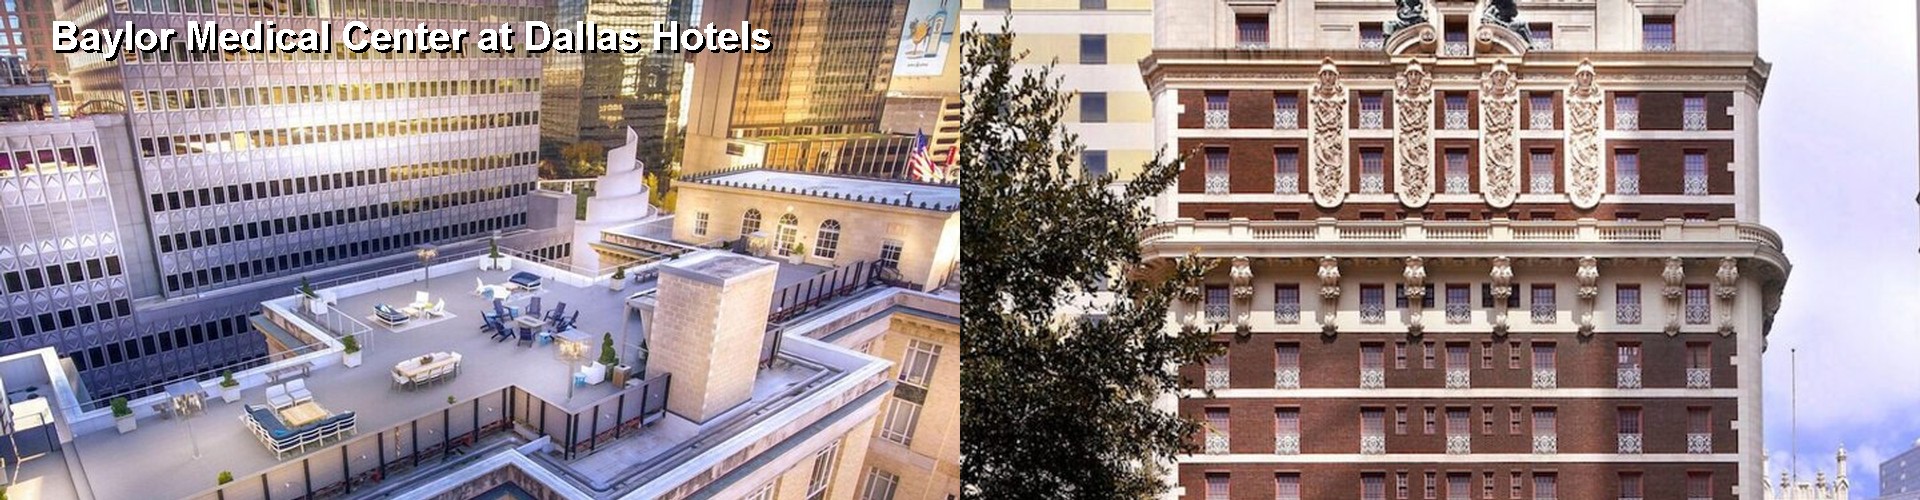 5 Best Hotels near Baylor Medical Center at Dallas